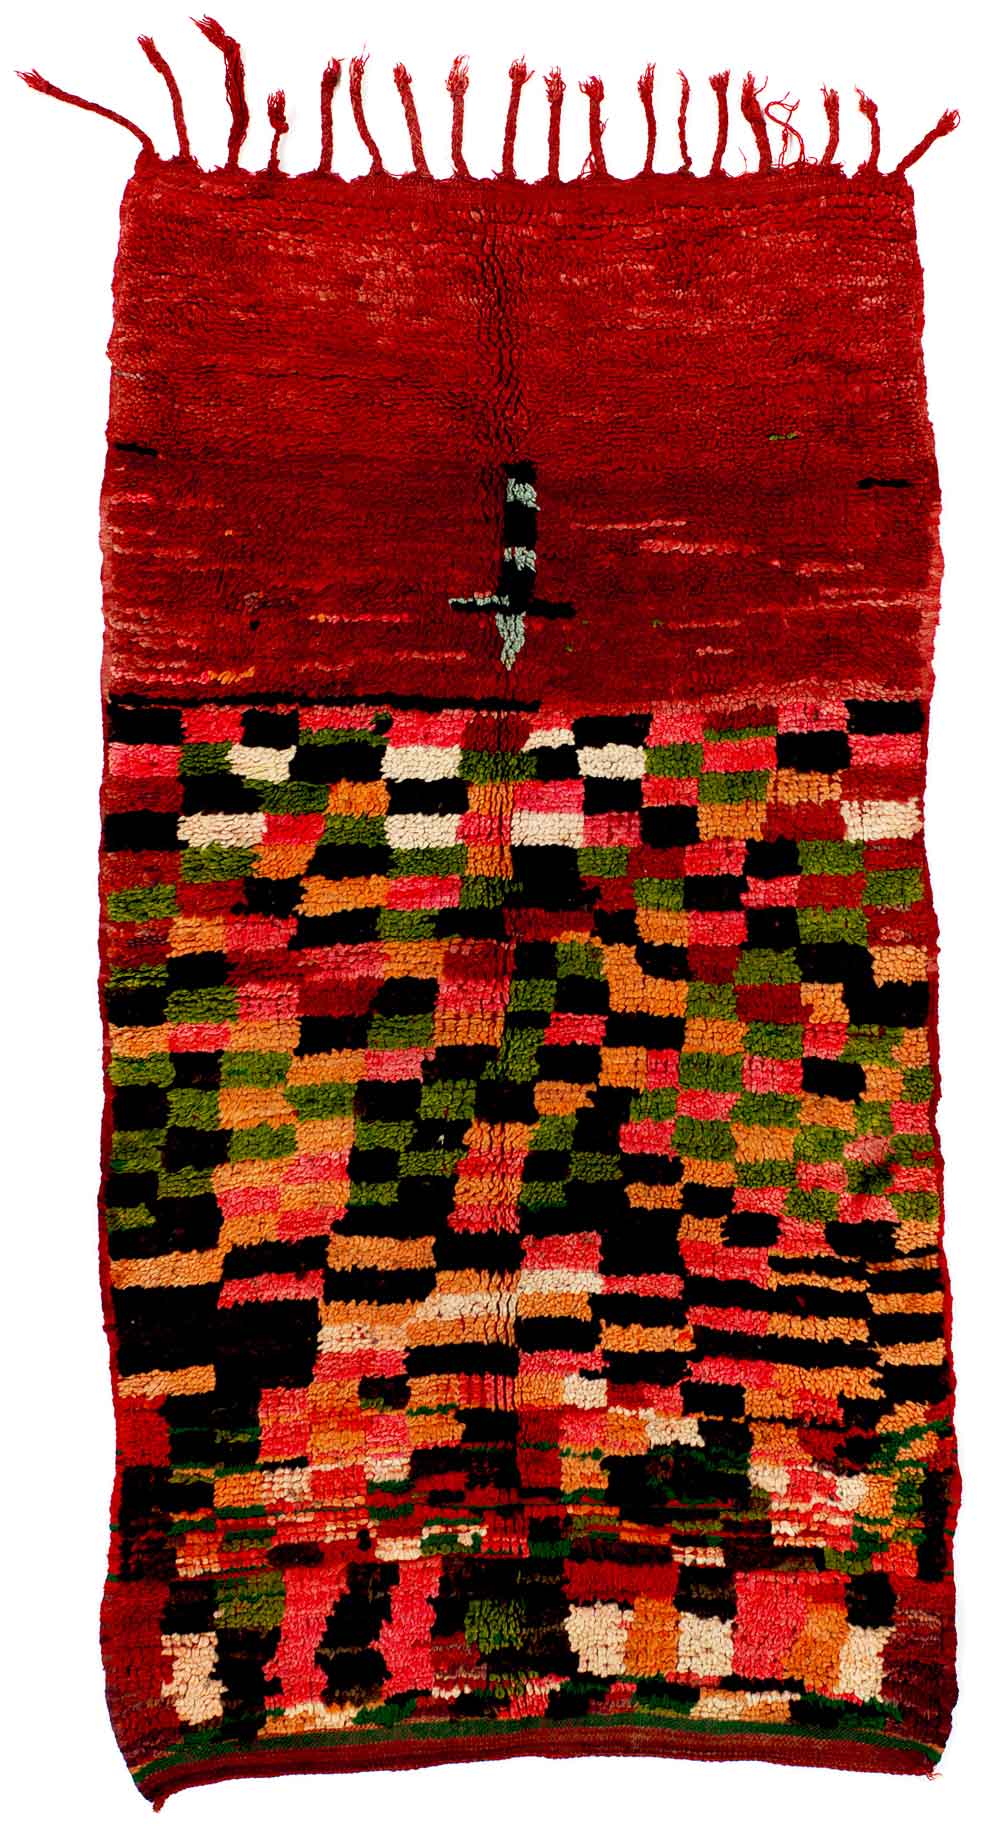 Boujad rug, central Middle Atlas, Morocco, 20th century. Jürgen Adam Collection at The International Design Museum, Munich 